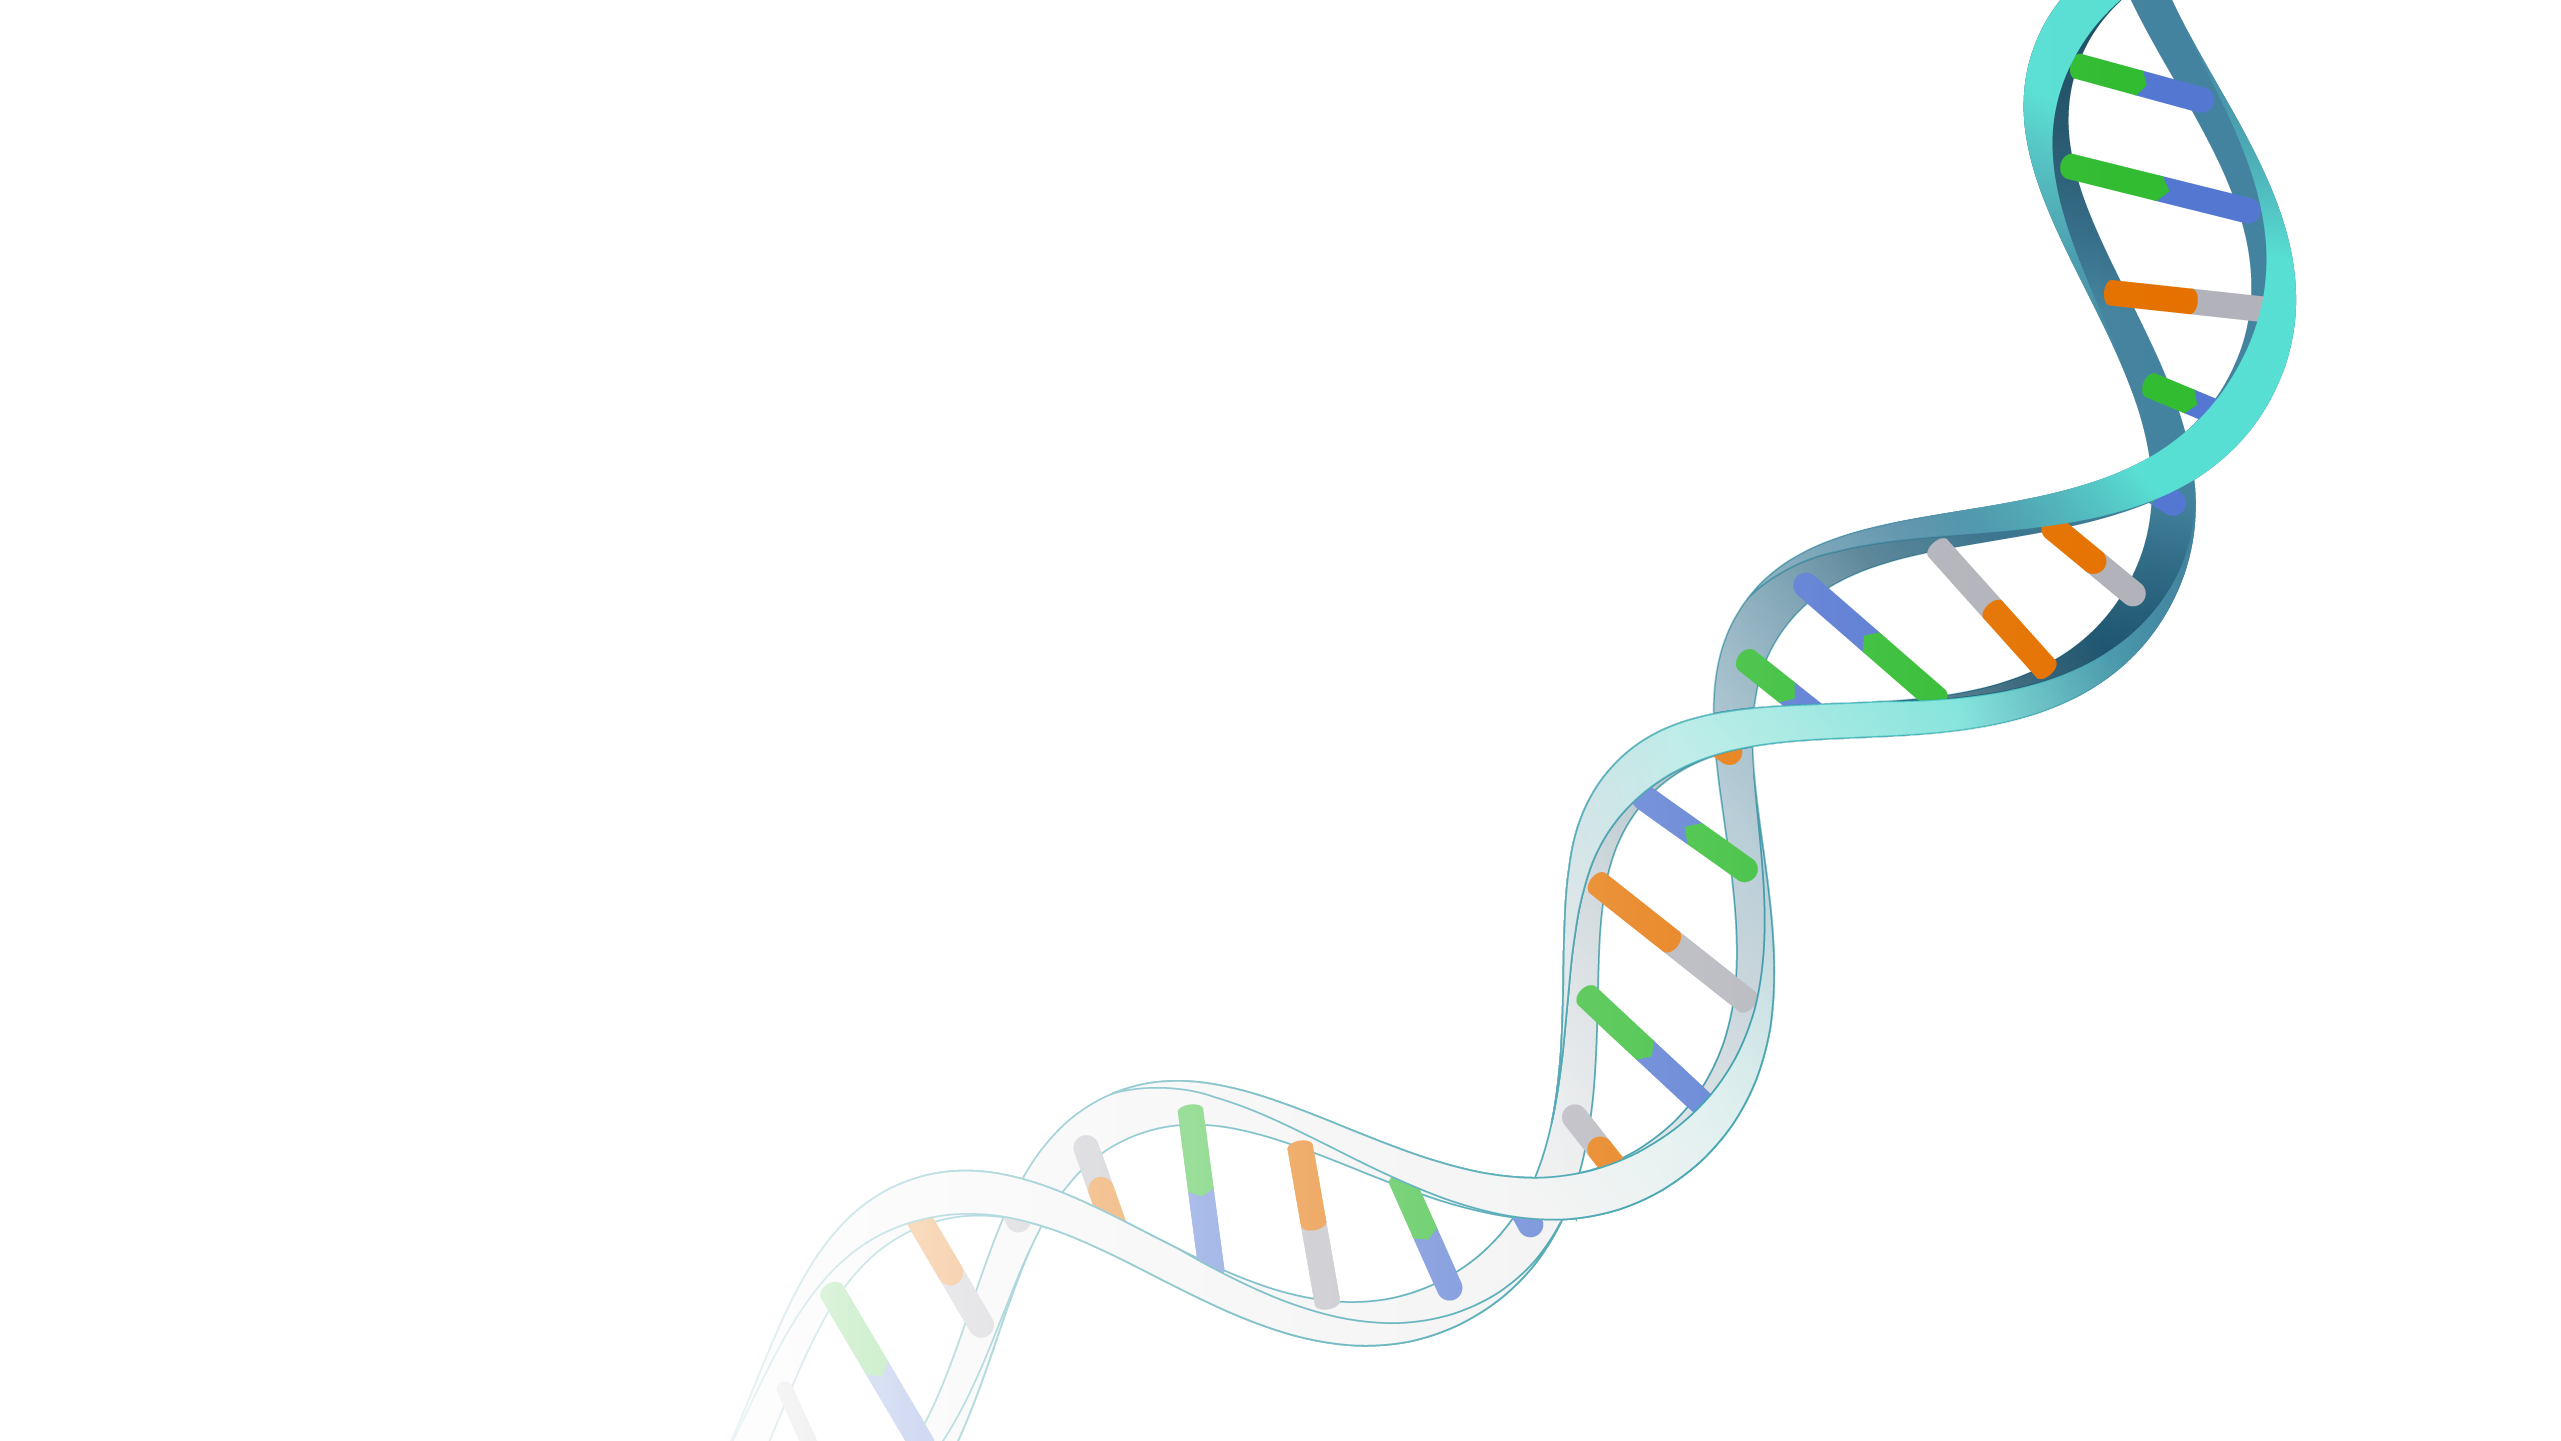 Generic DNA